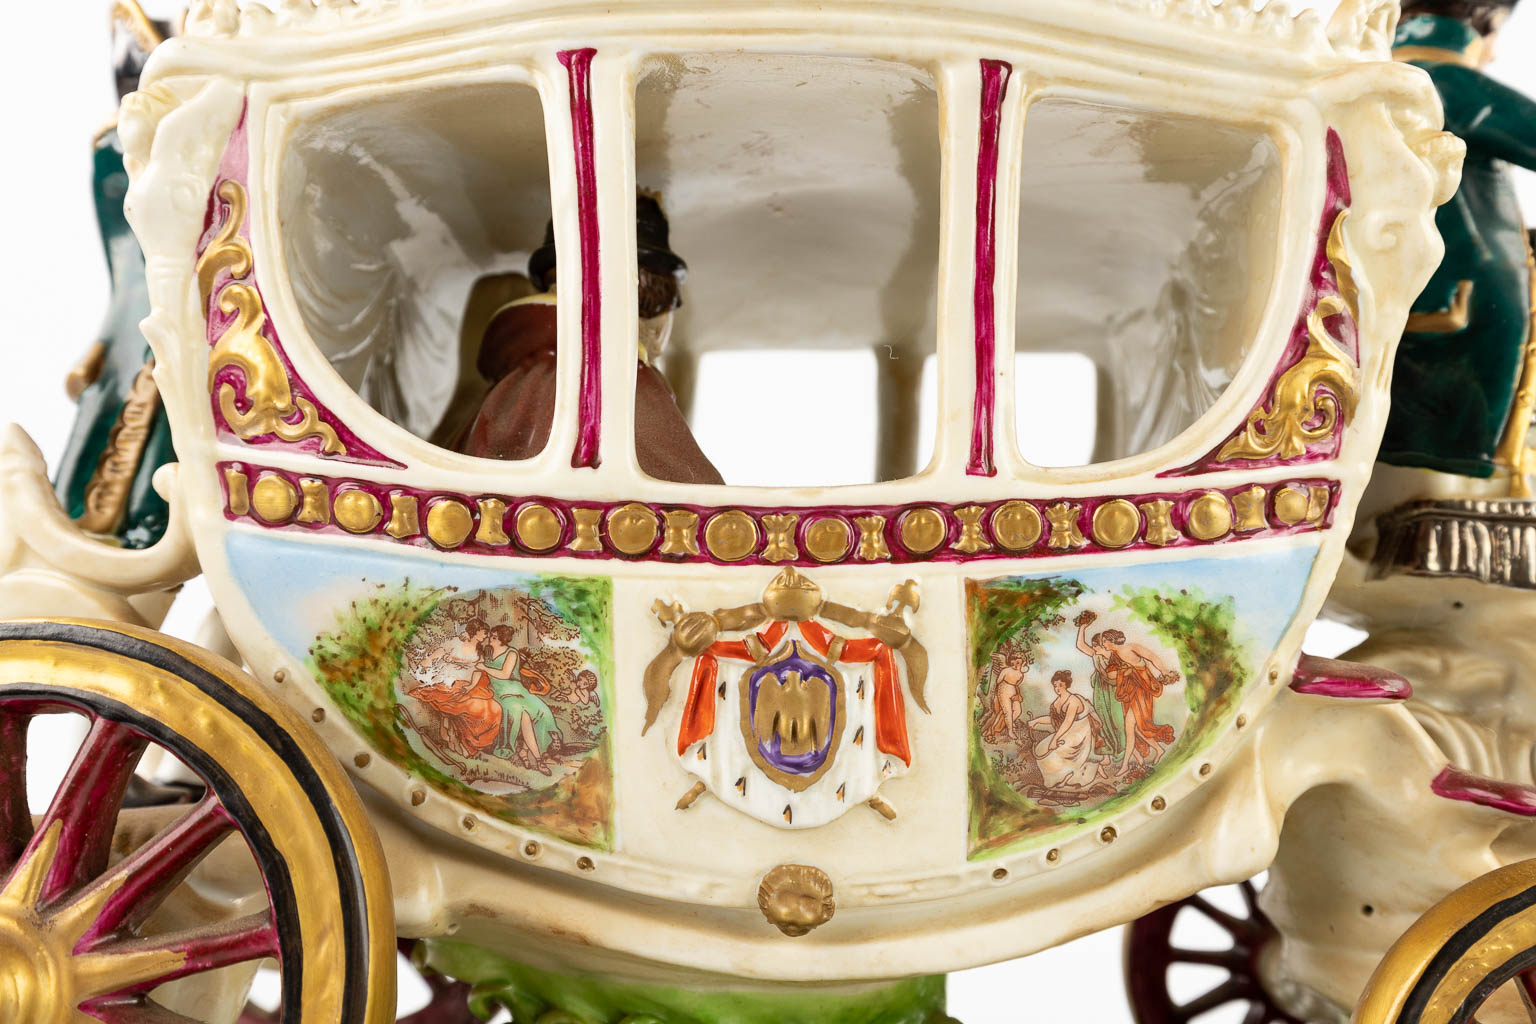 Sitzendorf, a large horse-drawn Marriage carriage of Napoleon the 1st. Polychrome porcelain. 20th C. (D:20 x W:67 x H:30 cm)